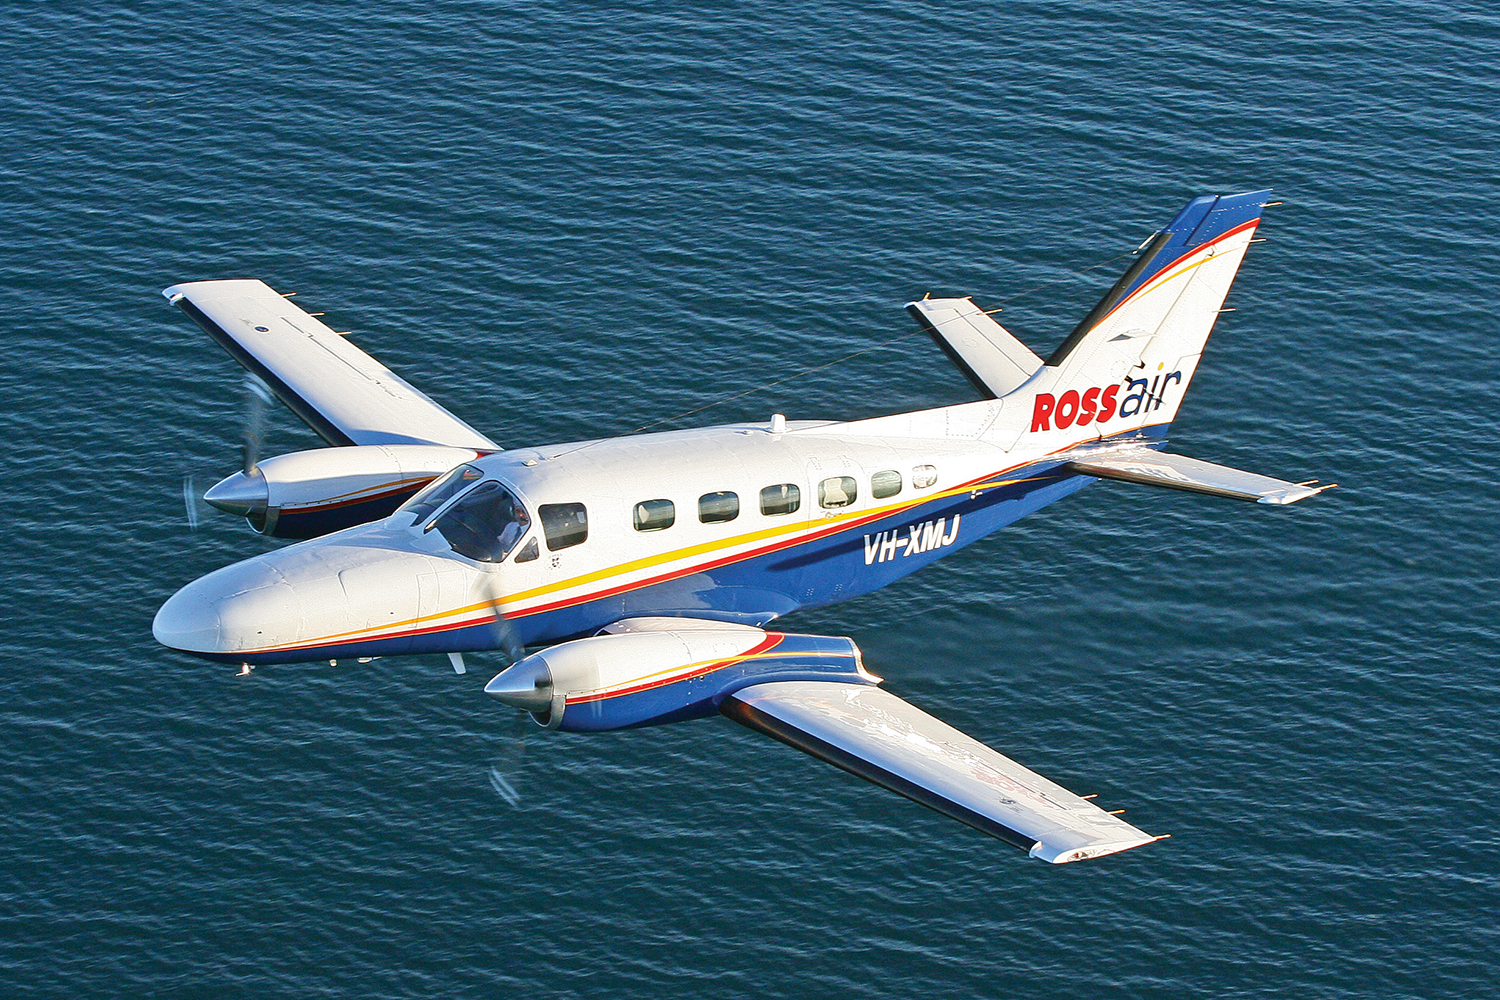 Rossair Aviation aircraft design